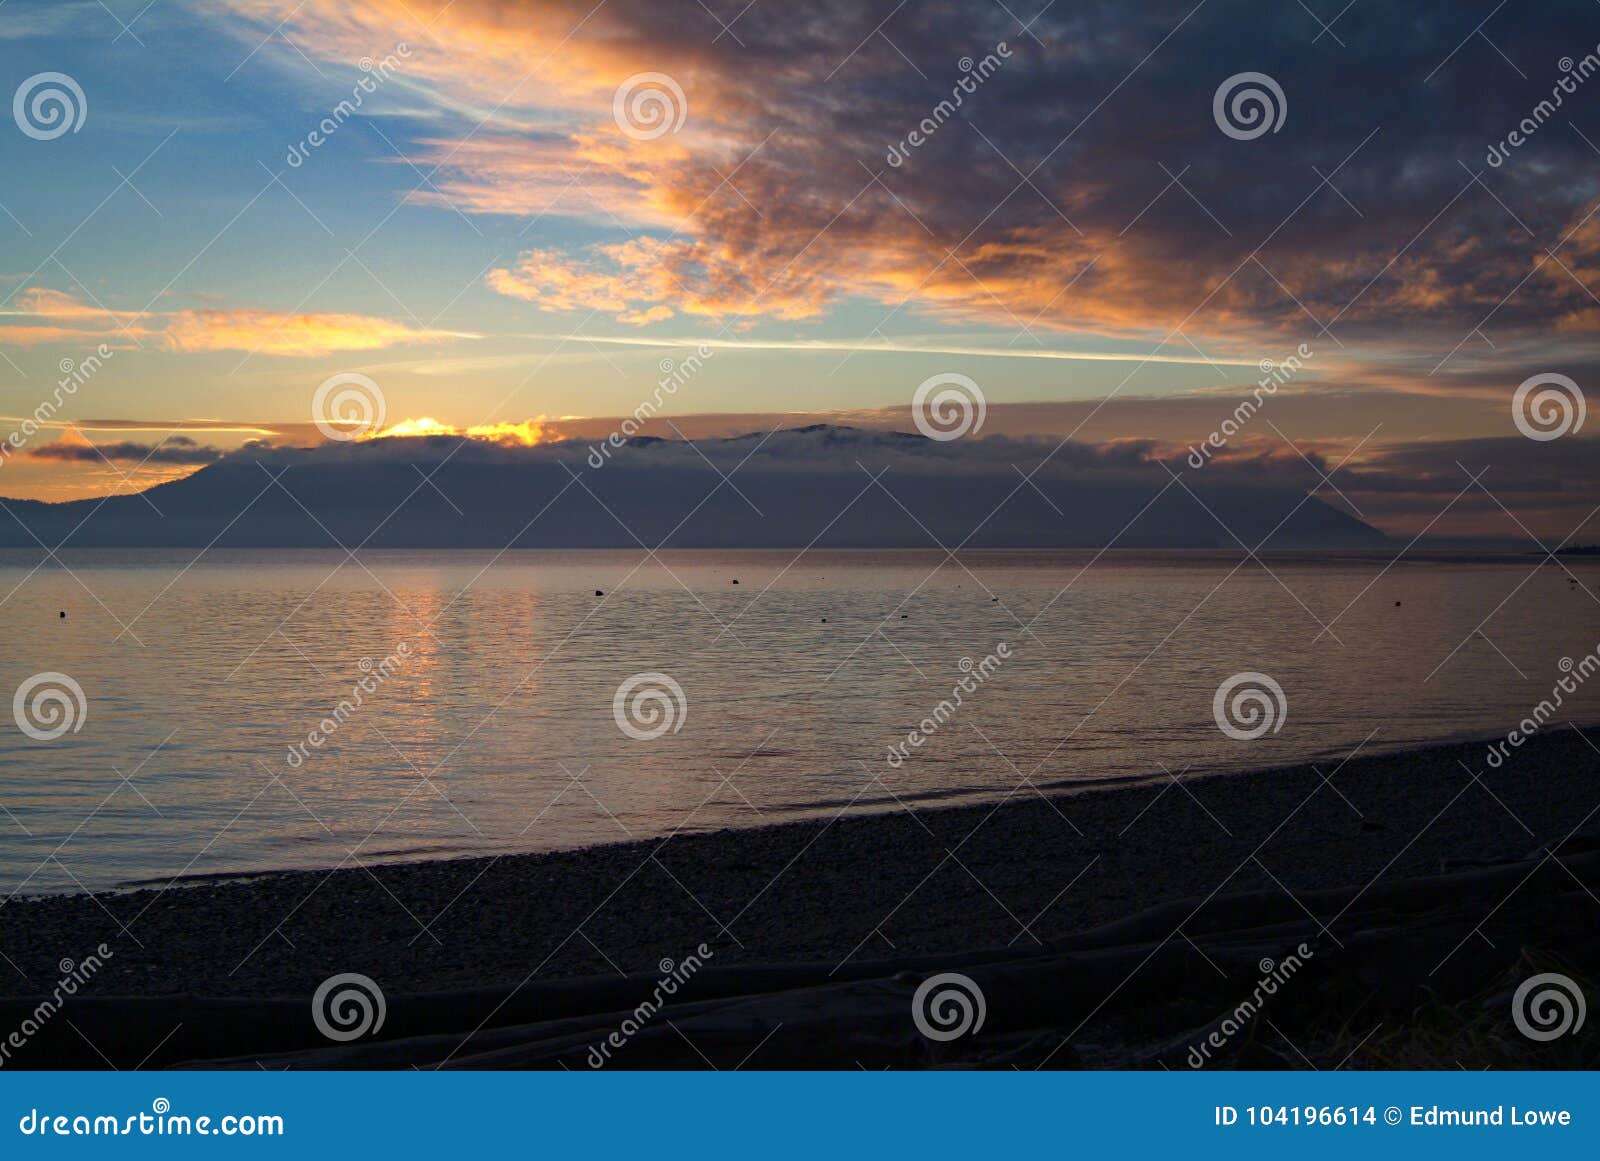 dramatic sky and sunset over orcas island, washington, usa.